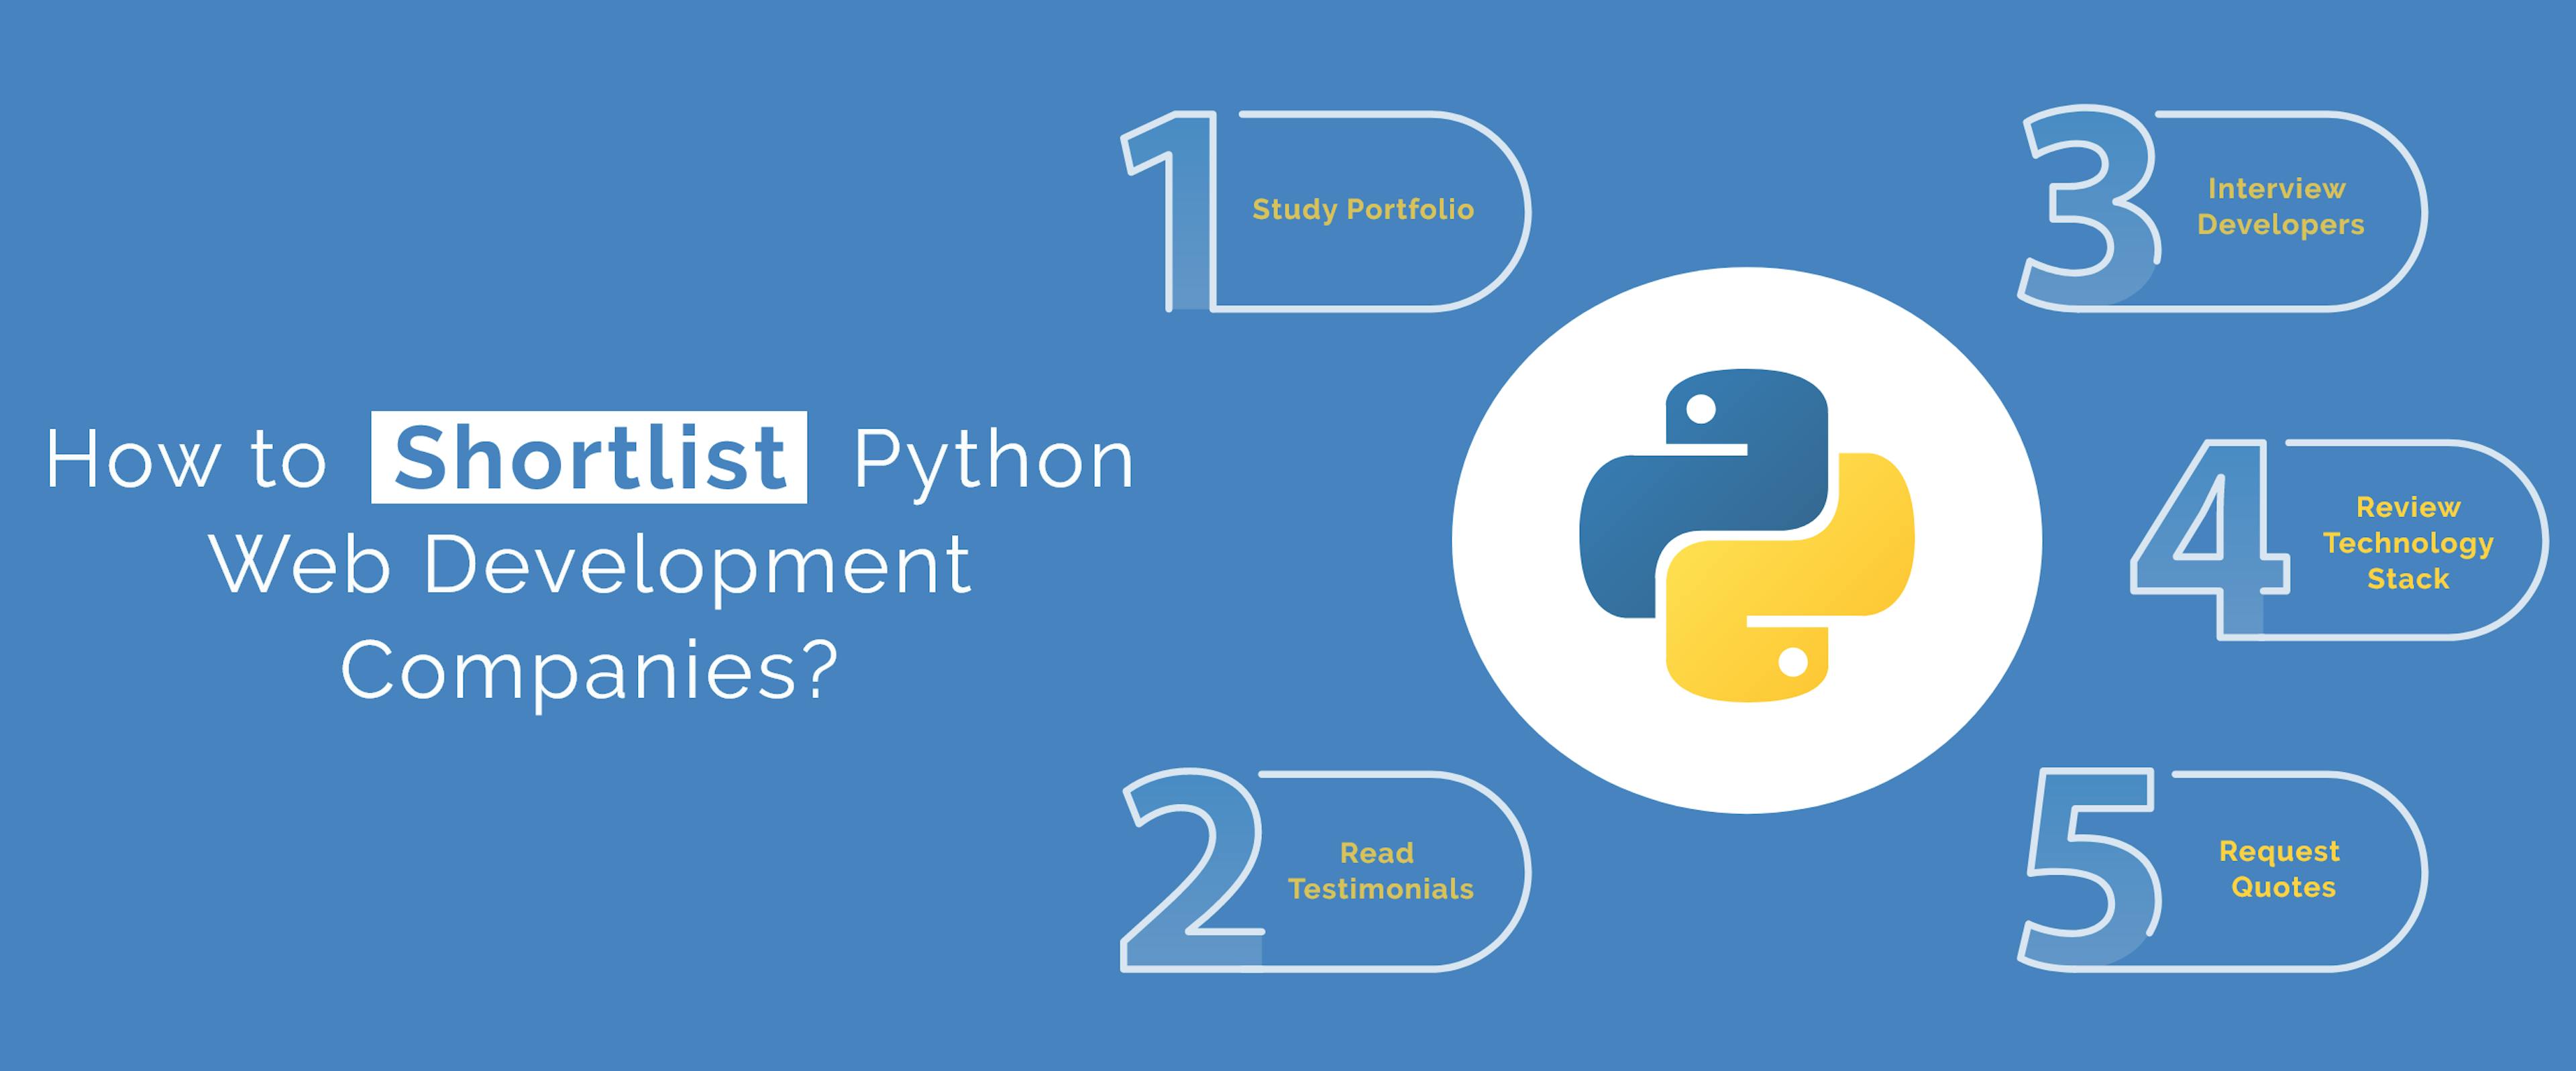 Key Points for Shortlist Python Web Development Companies